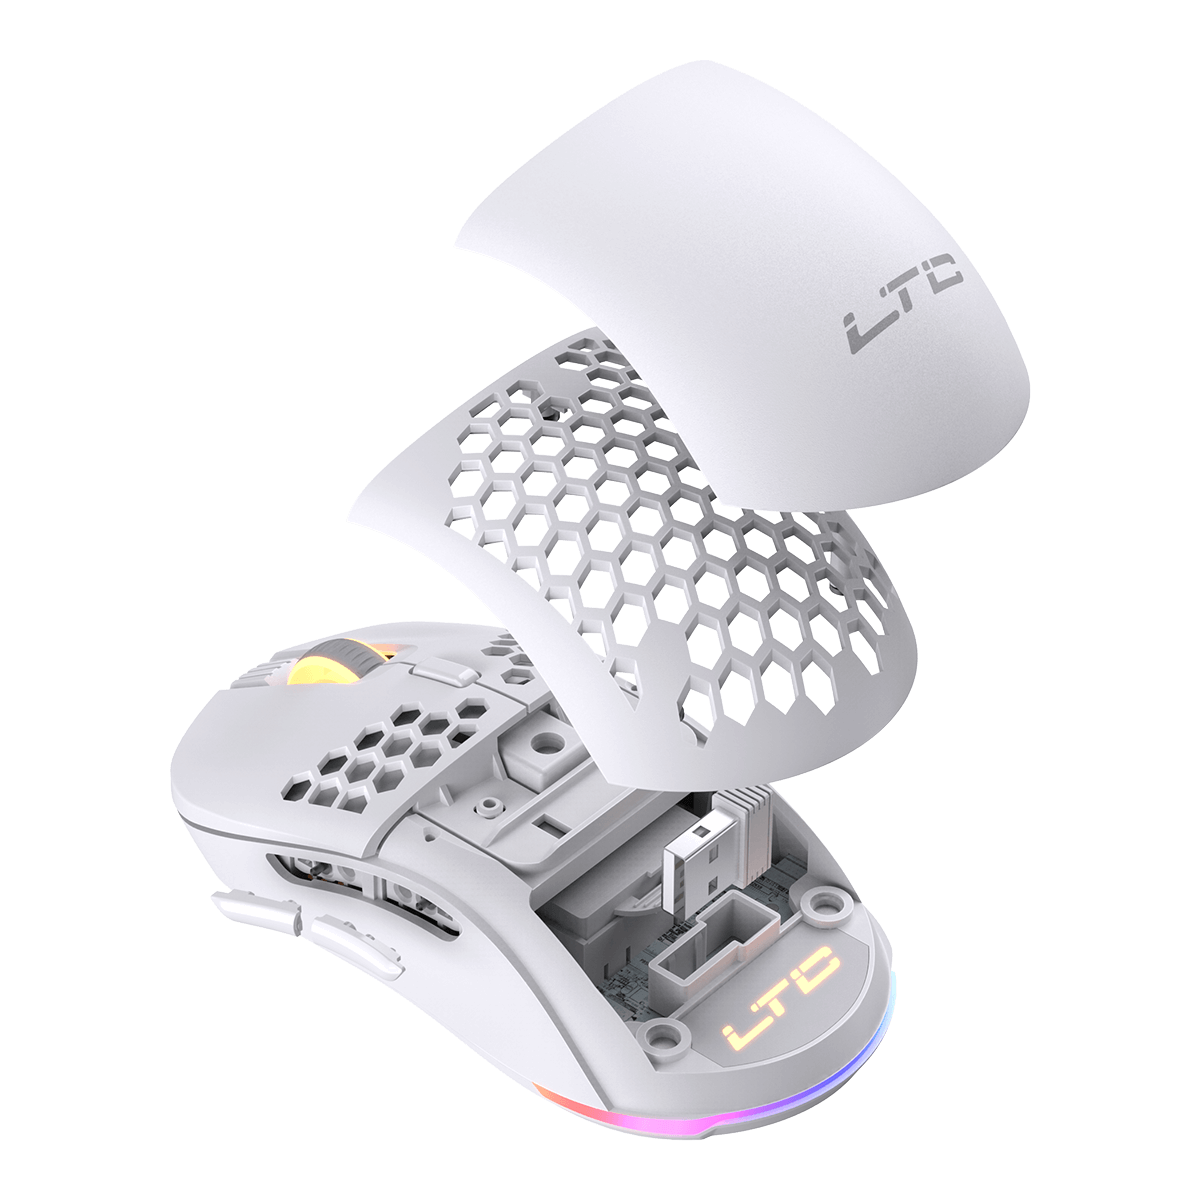 LTC RGB Gaming Mouse, Lightweight Honeycomb Shell, 6400DPI